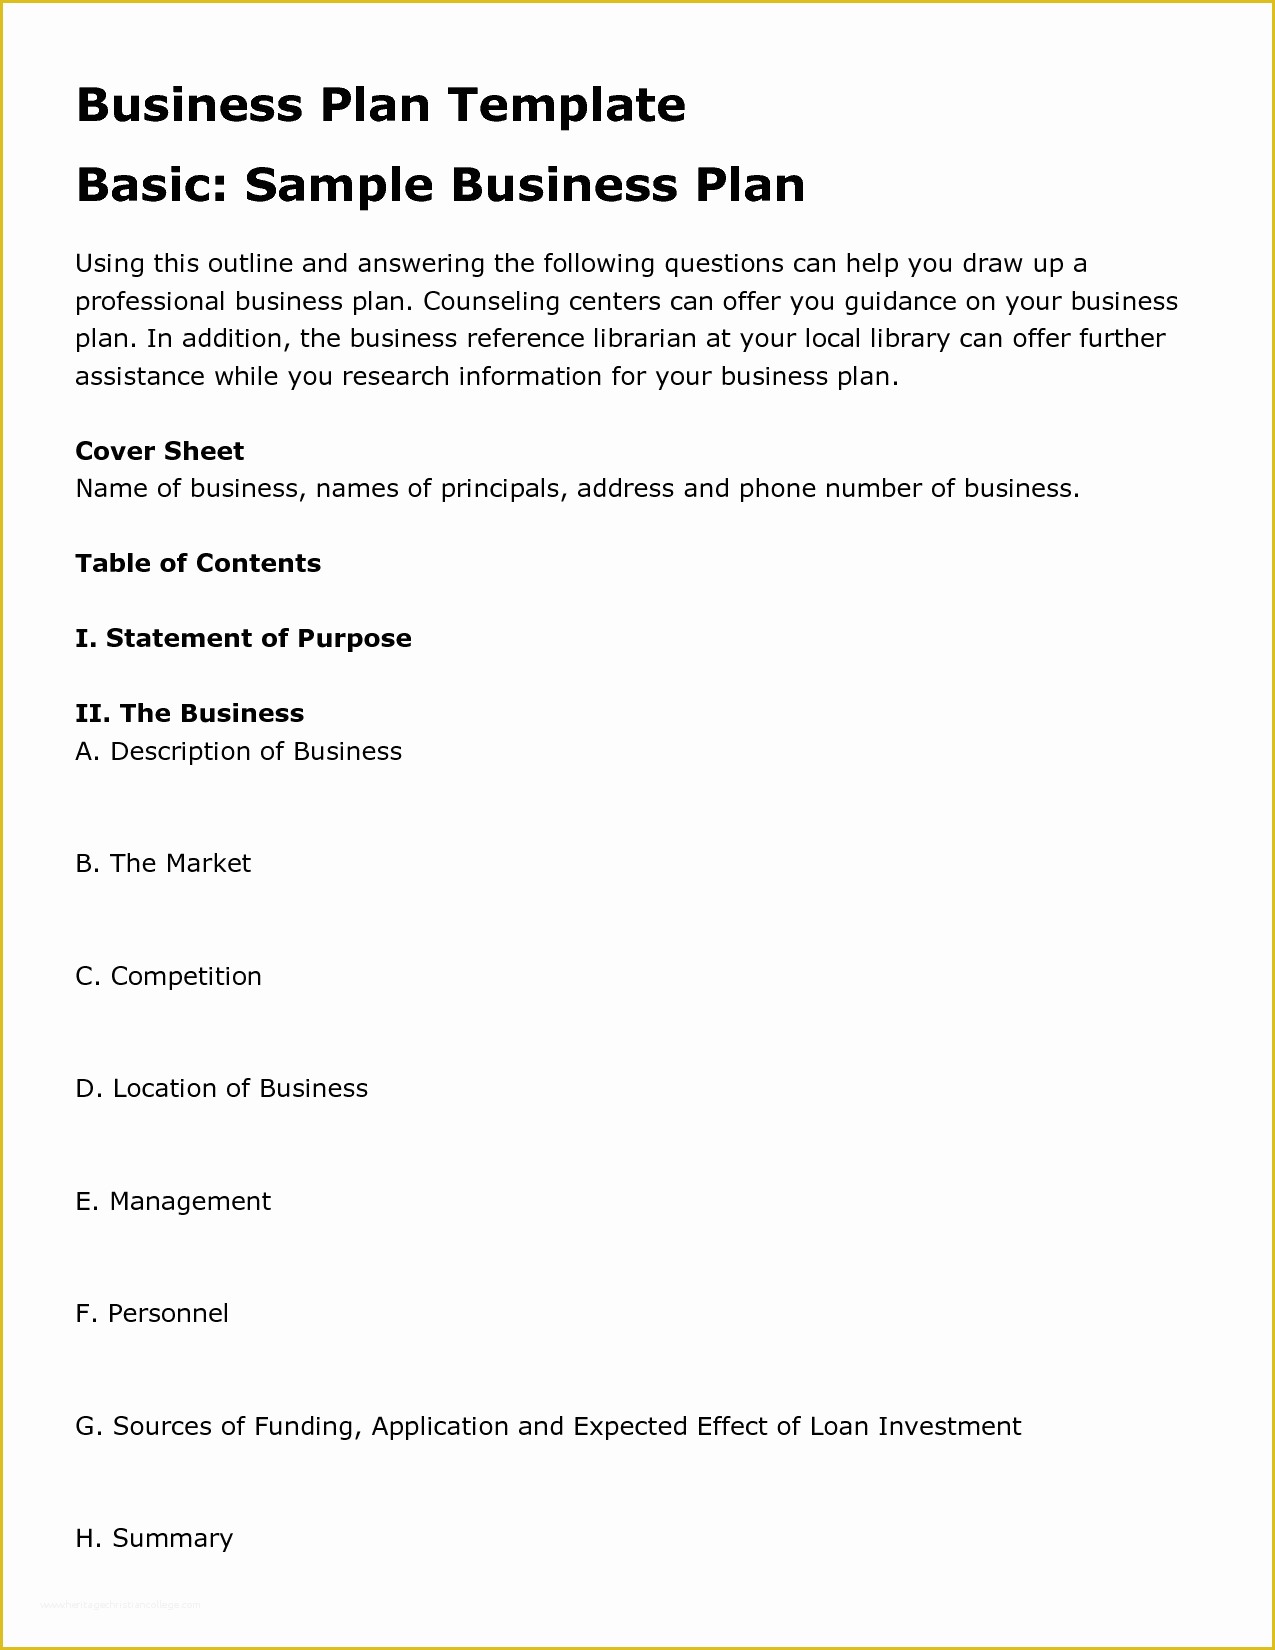 Free Basic Business Plan Template Download Of Simple Business Plan Design Entrepreneur